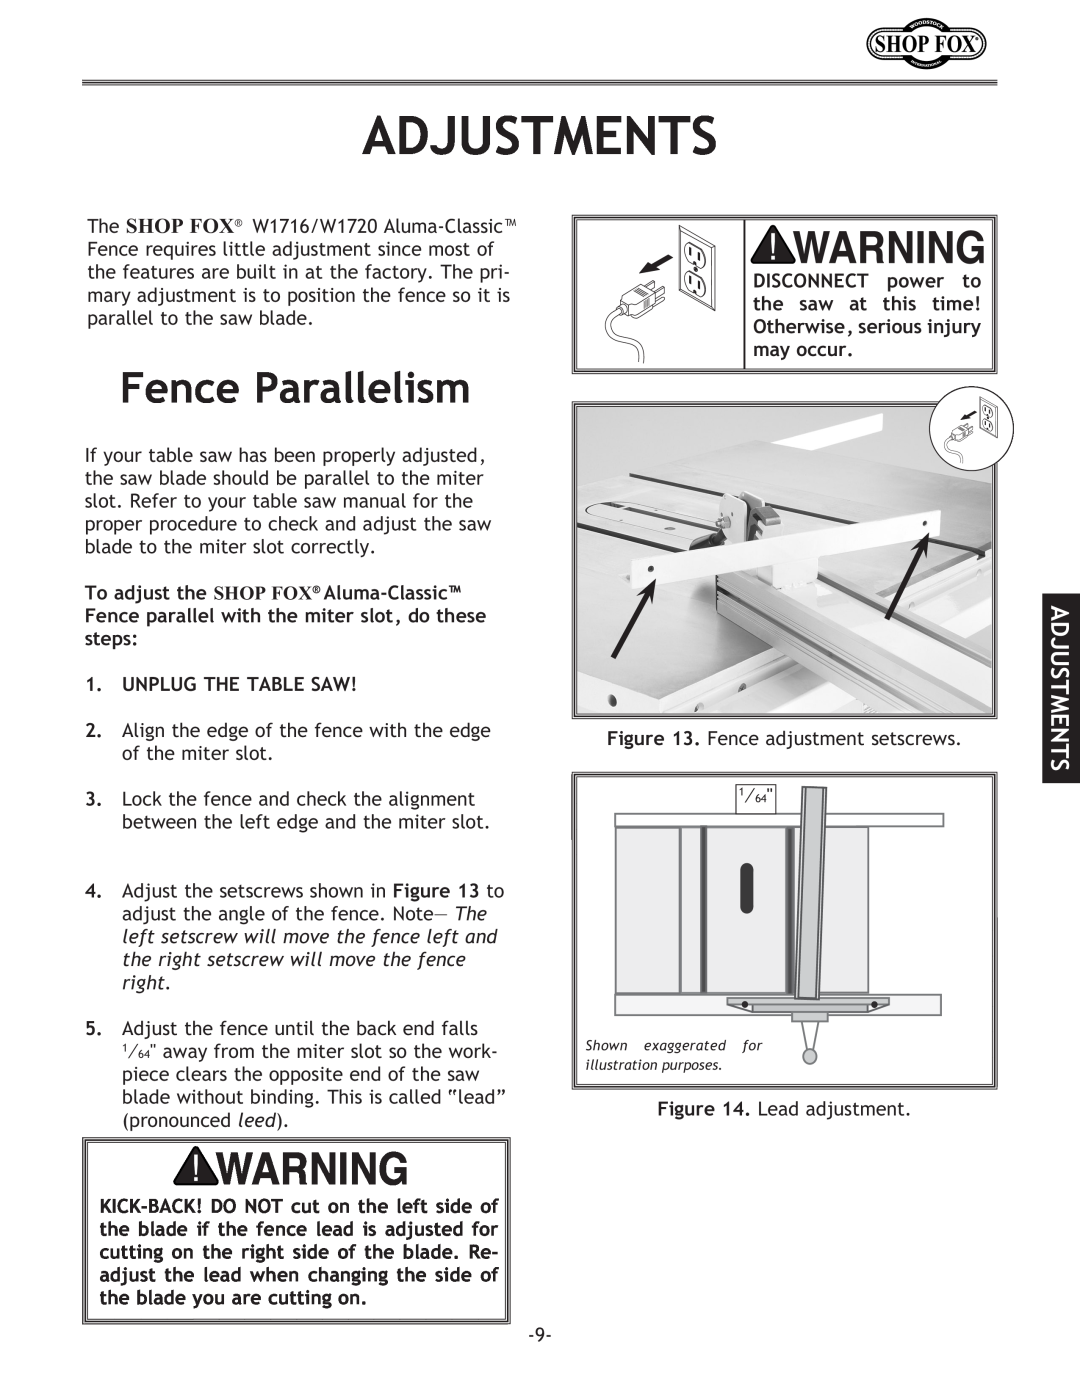 Woodstock W1716 instruction manual Adjustments, Fence Parallelism 